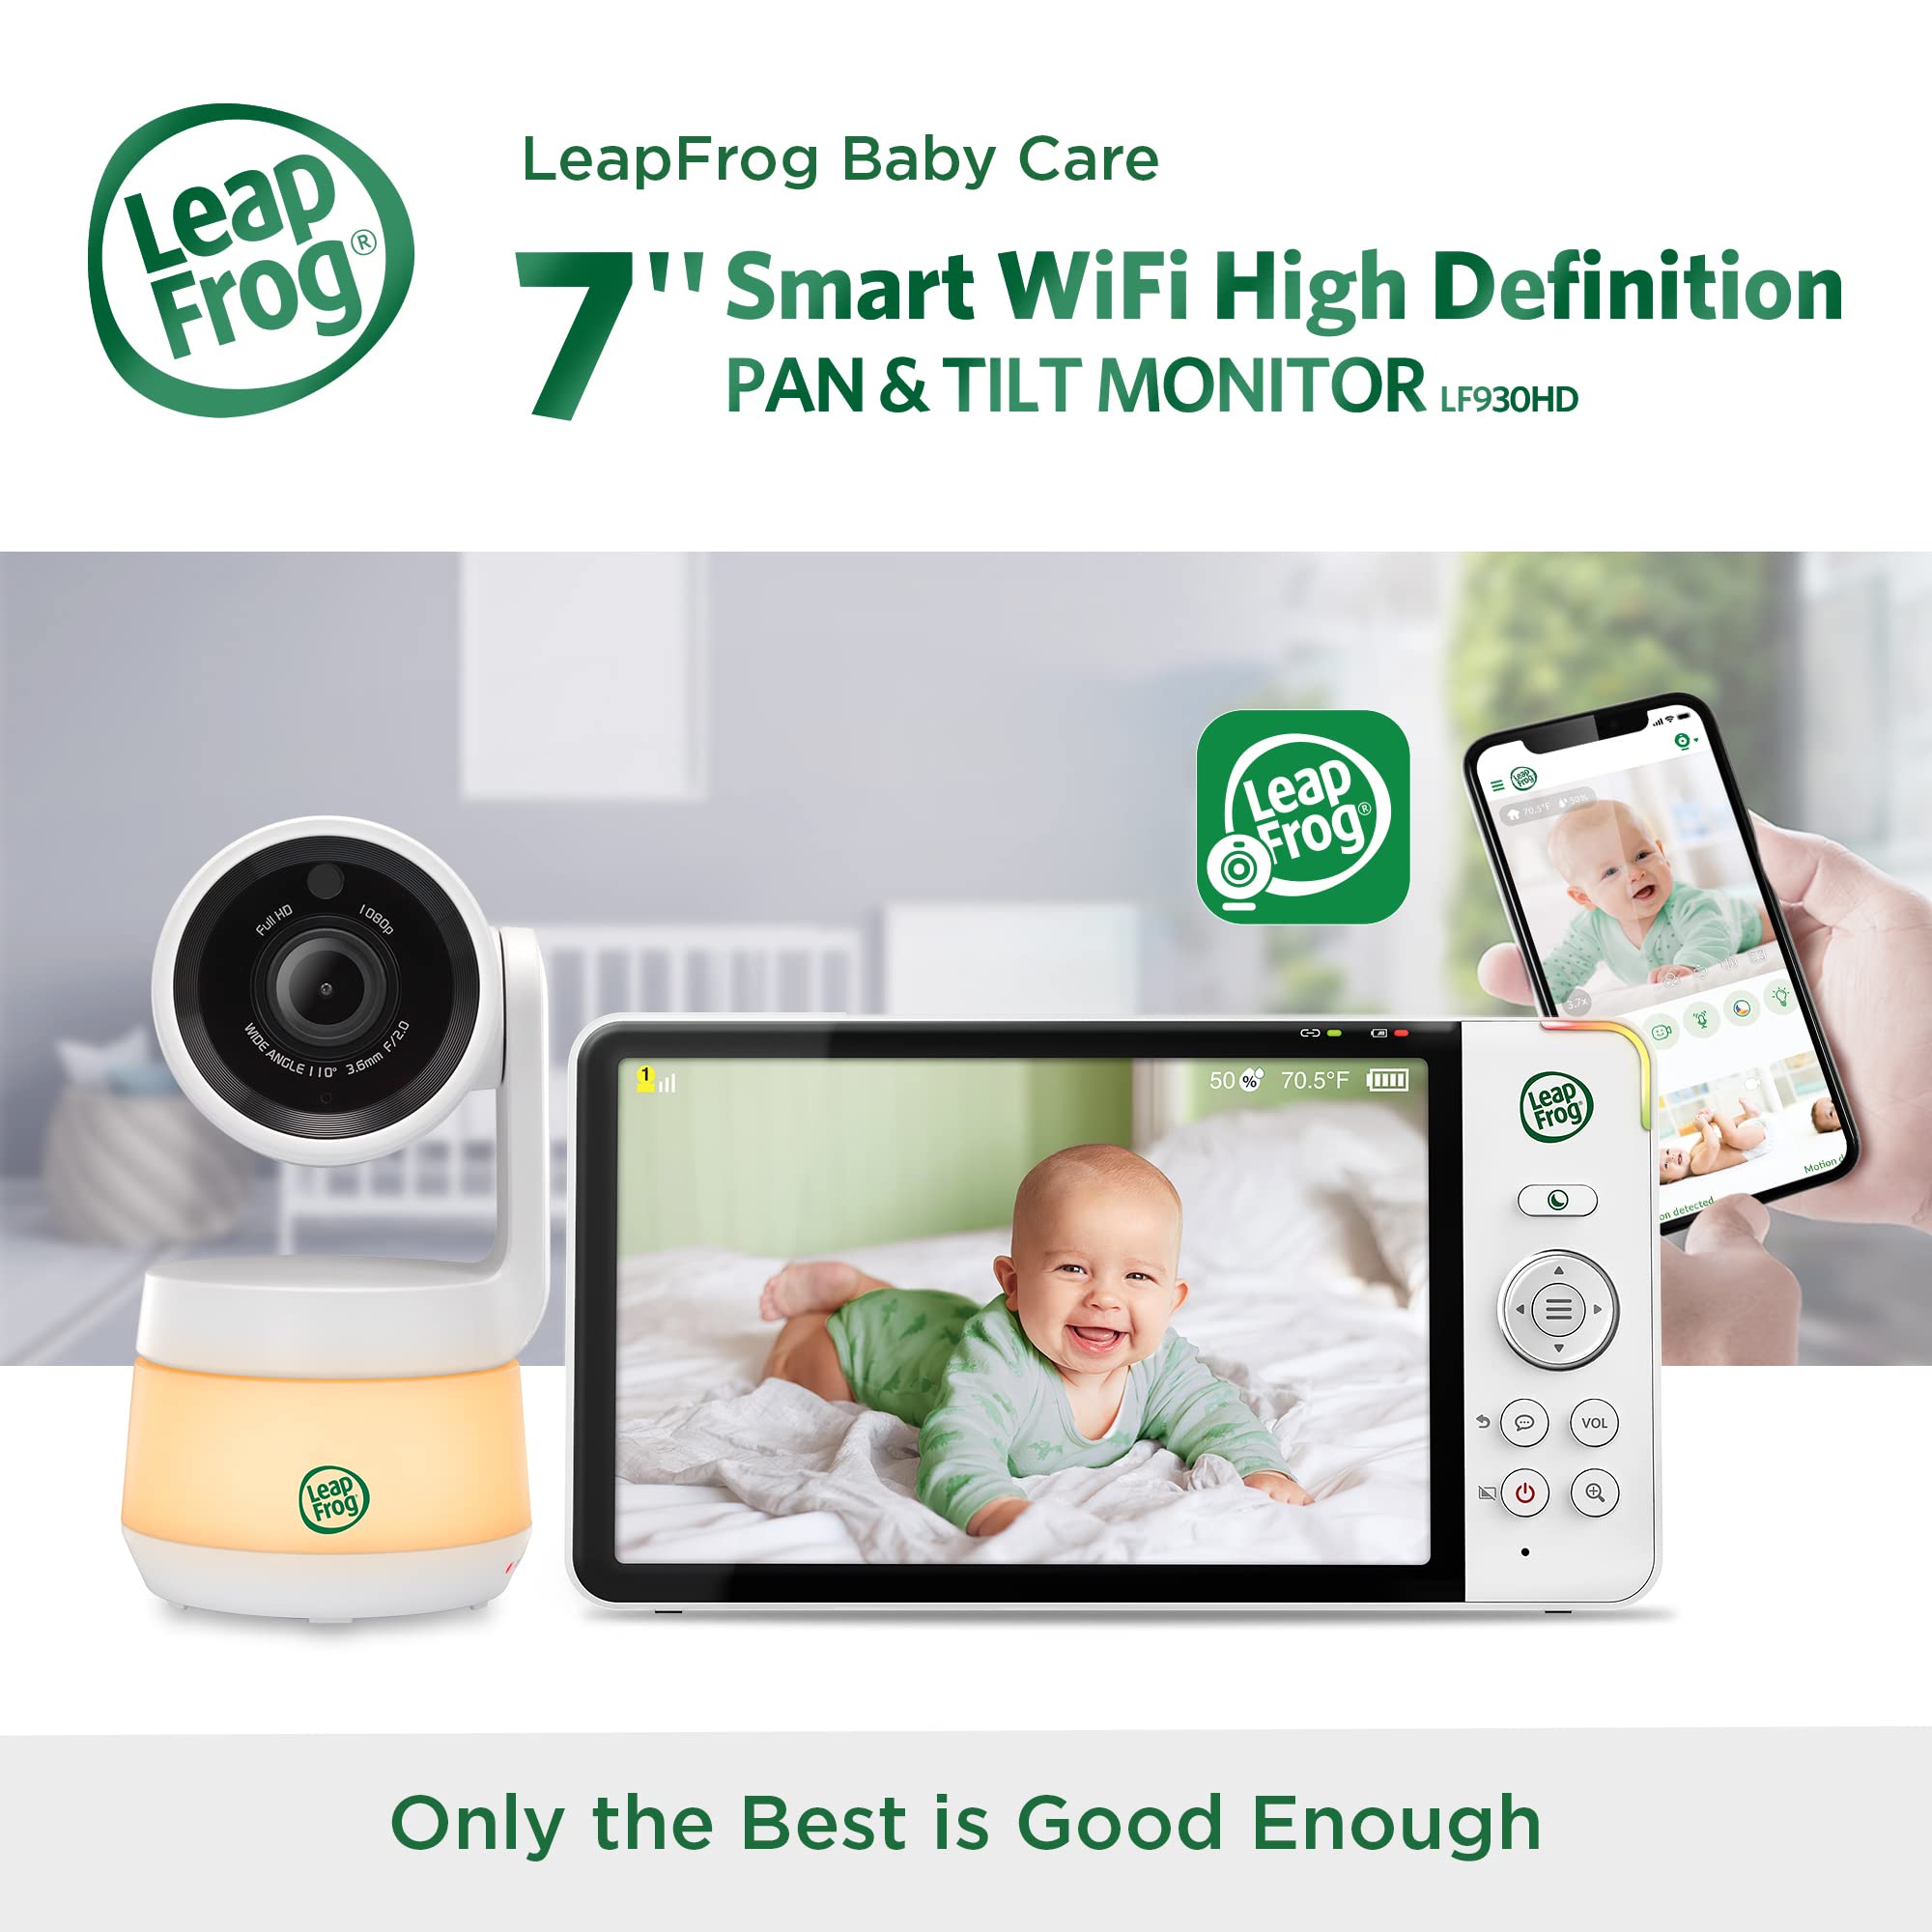 LeapFrog LF930HD 1080p Smart WiFi Remote Access Baby Monitor, 360° Pan & Tilt, 7” 720p HD Display, Color Night Light, Color Night Vision, Two-Way Intercom, Smart Sensors